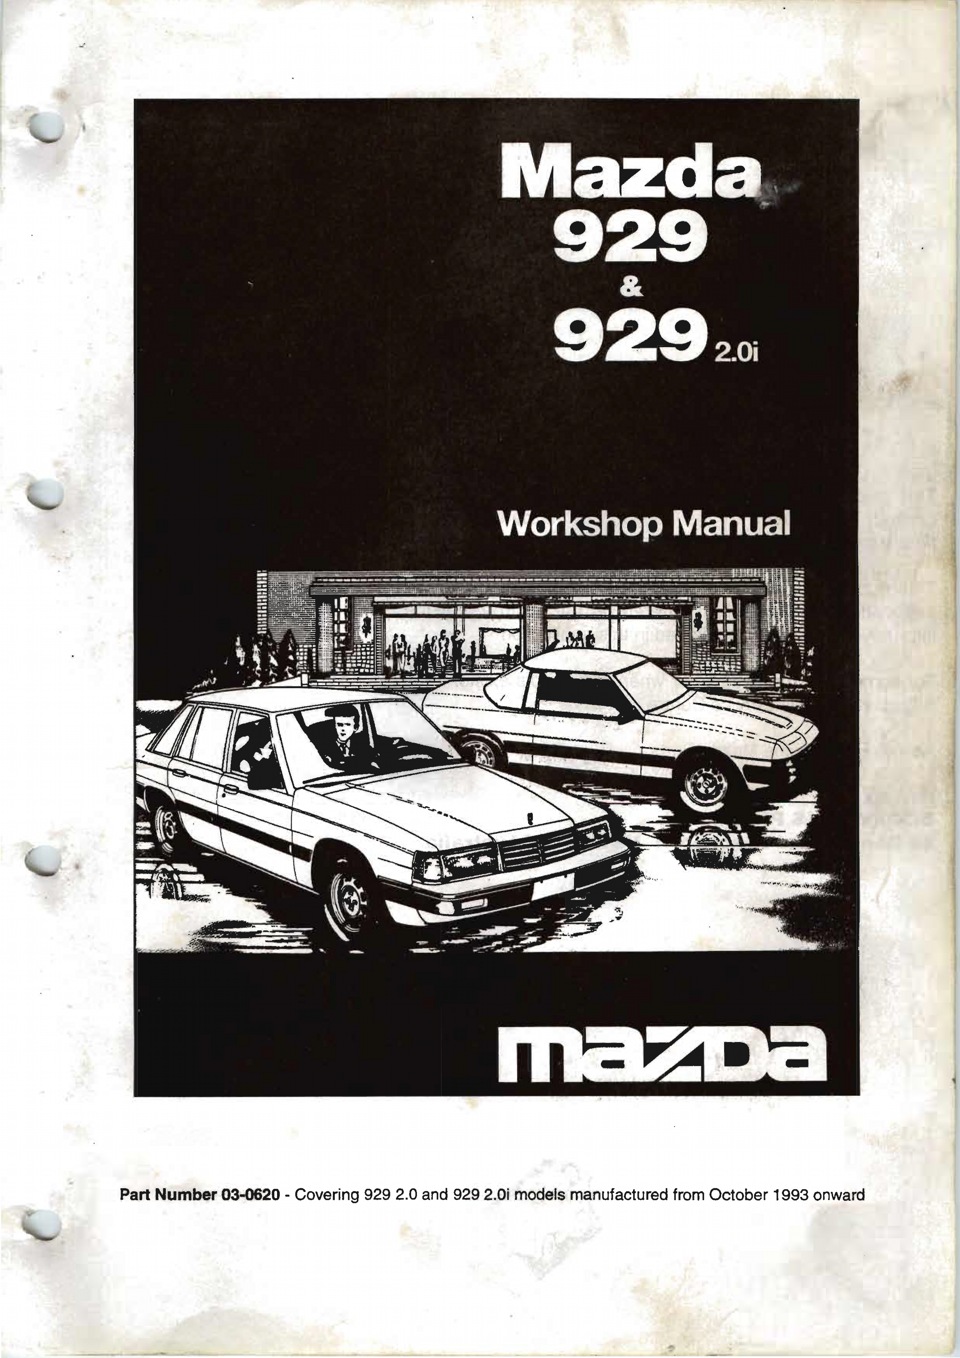 Mazda инструкция. Мануалы Мазда - drive2. Руководство Мазда 929. Мануал Мазда Льюис или 929 3 л. Мануал Мазда 929 дроссельная заслонка.